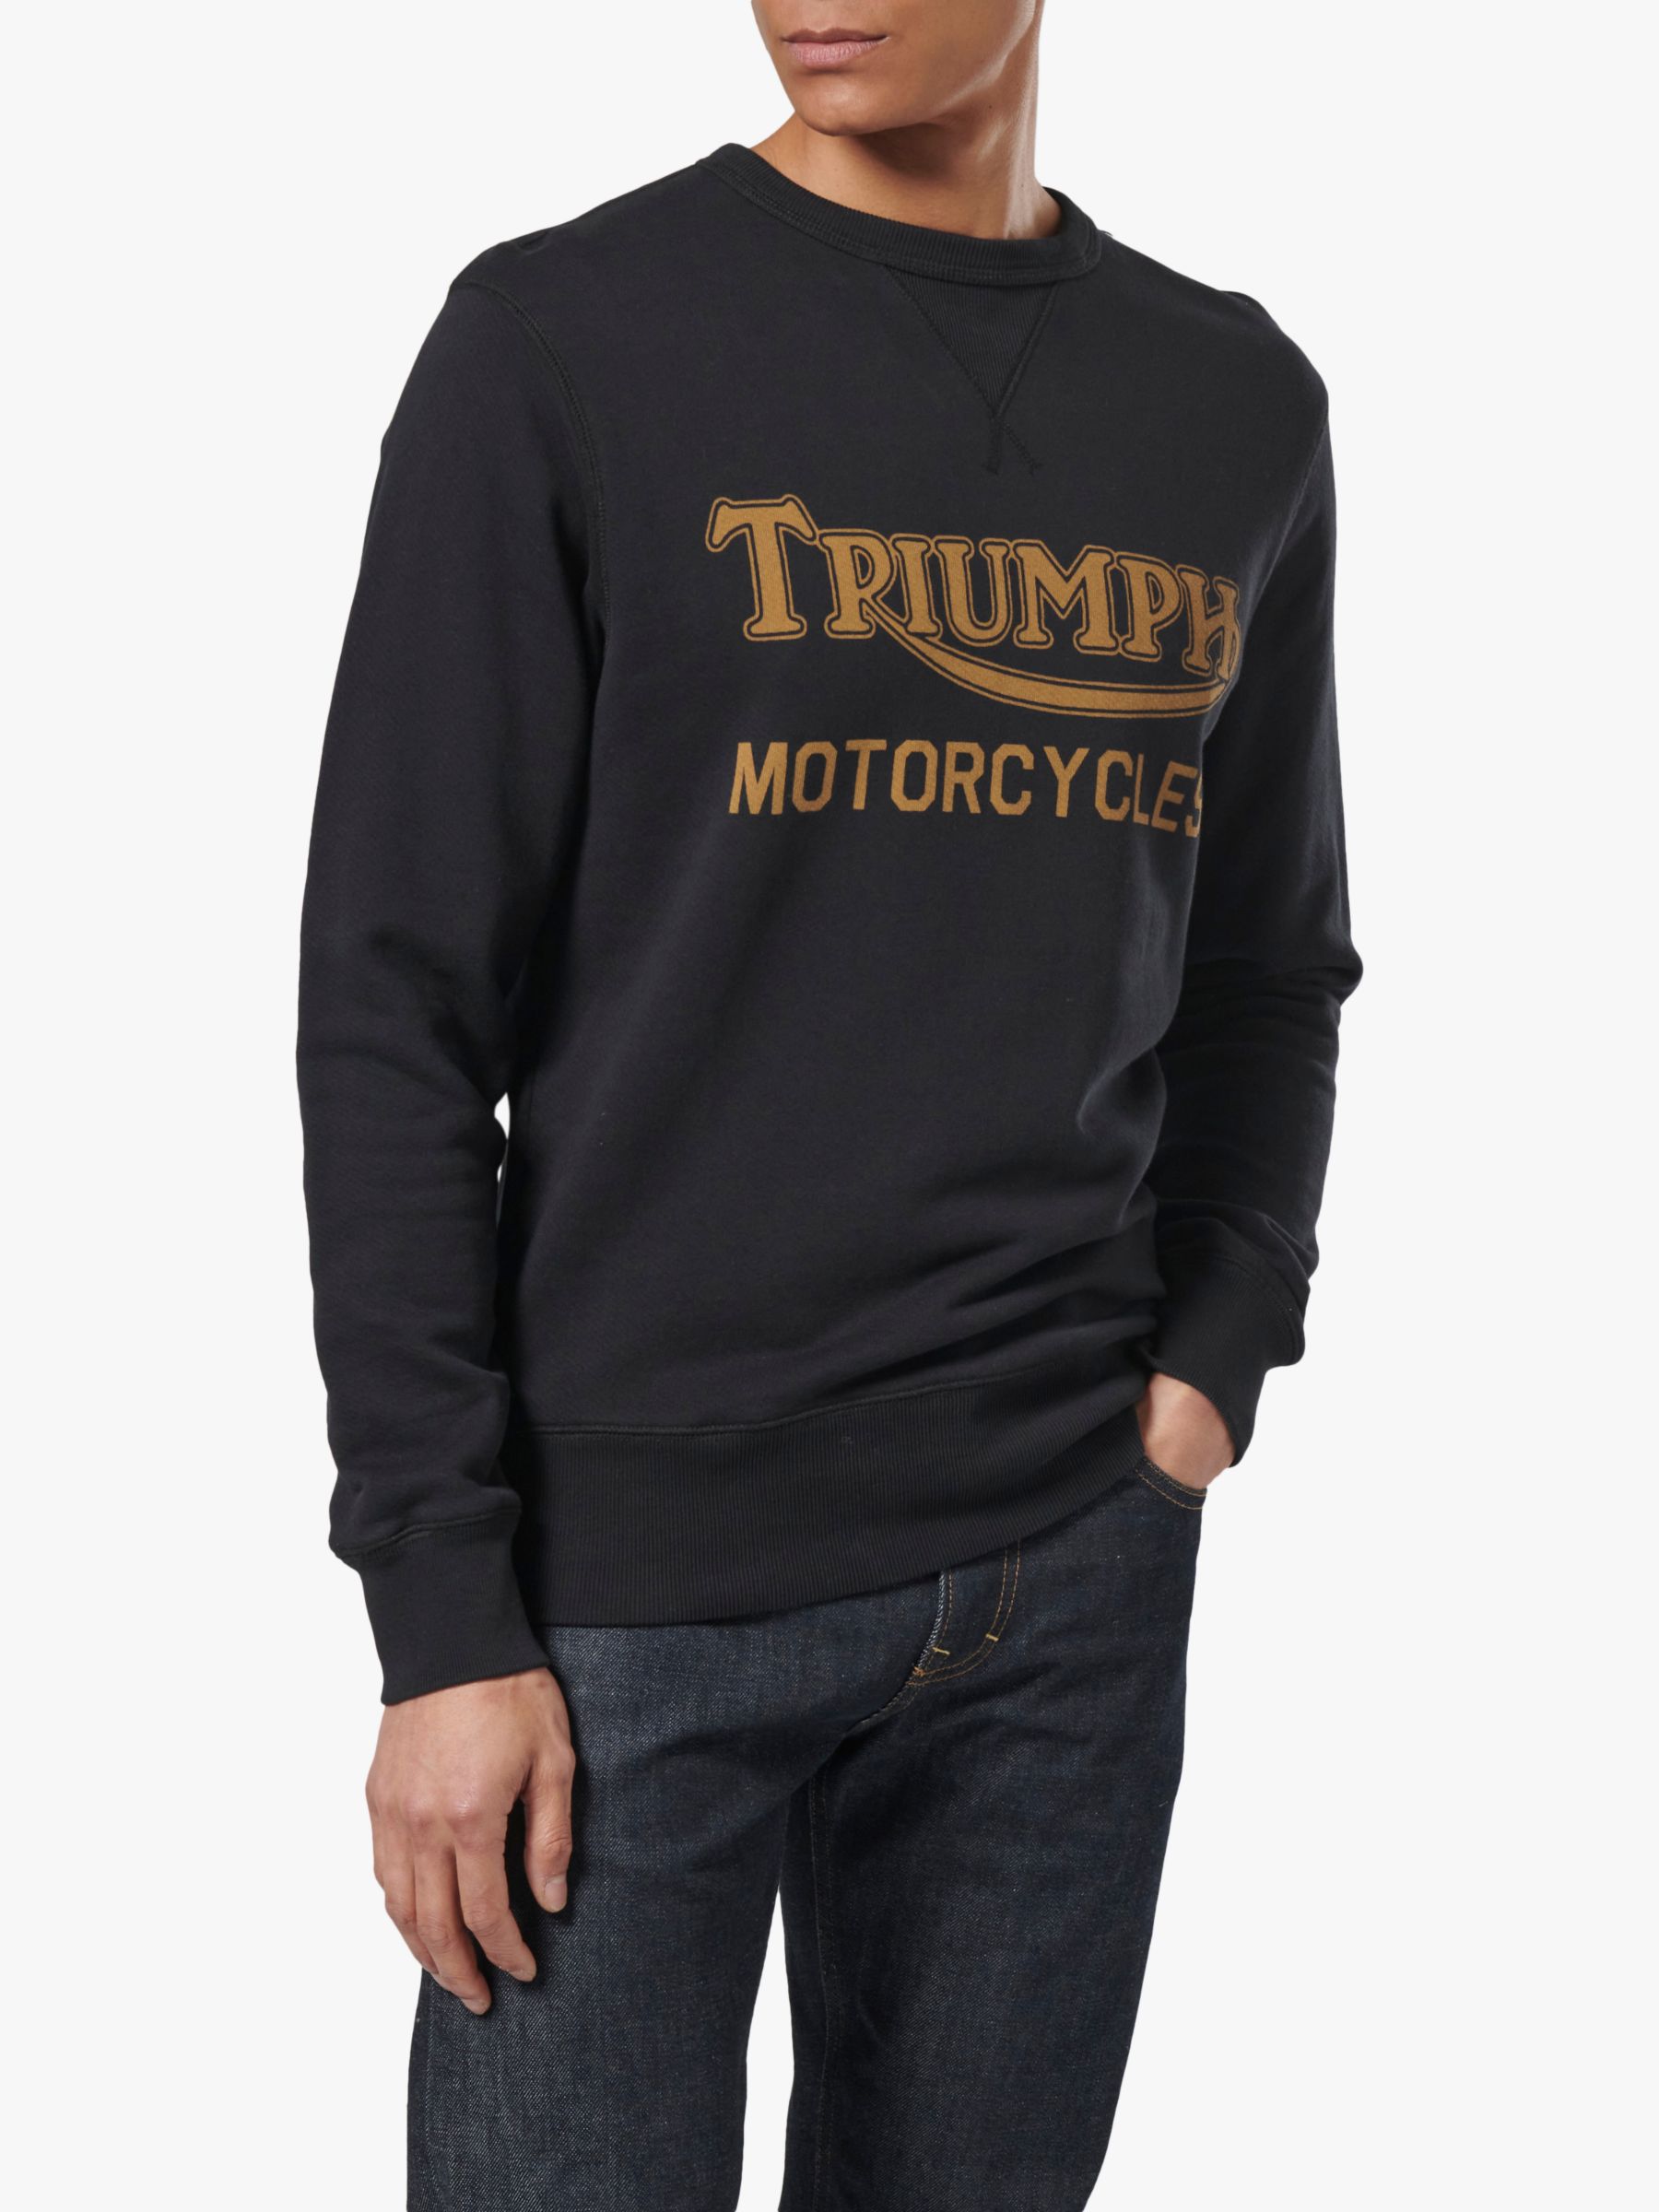 Buy Triumph Motorcycles Radial Sweatshirt Online at johnlewis.com